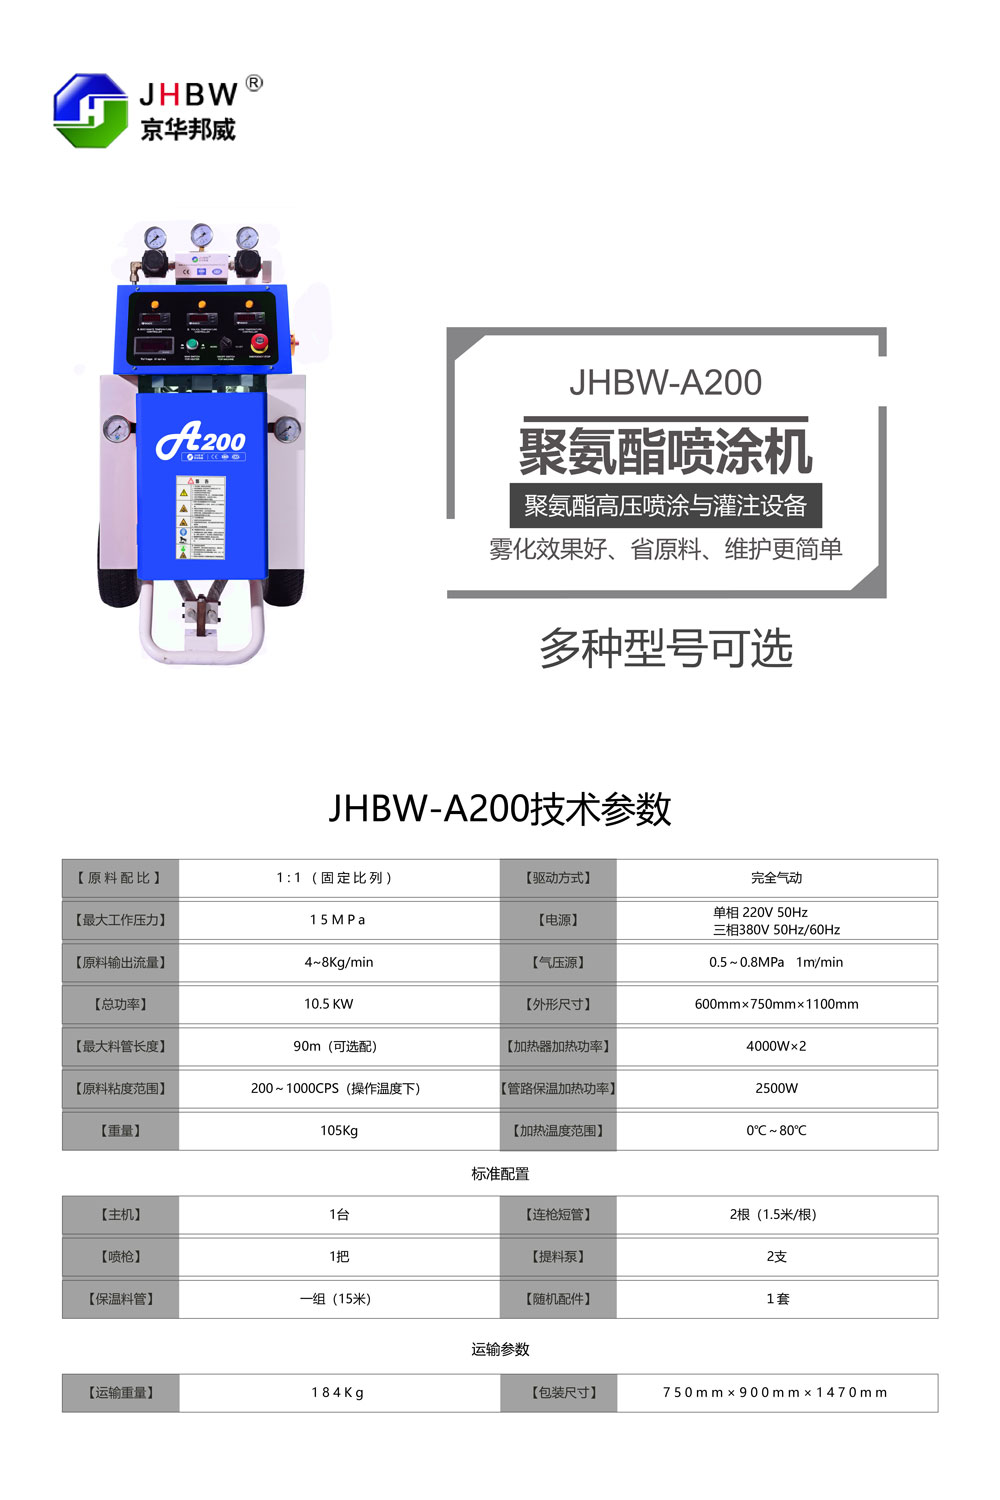 JHBW-A200聚氨酯喷涂设备